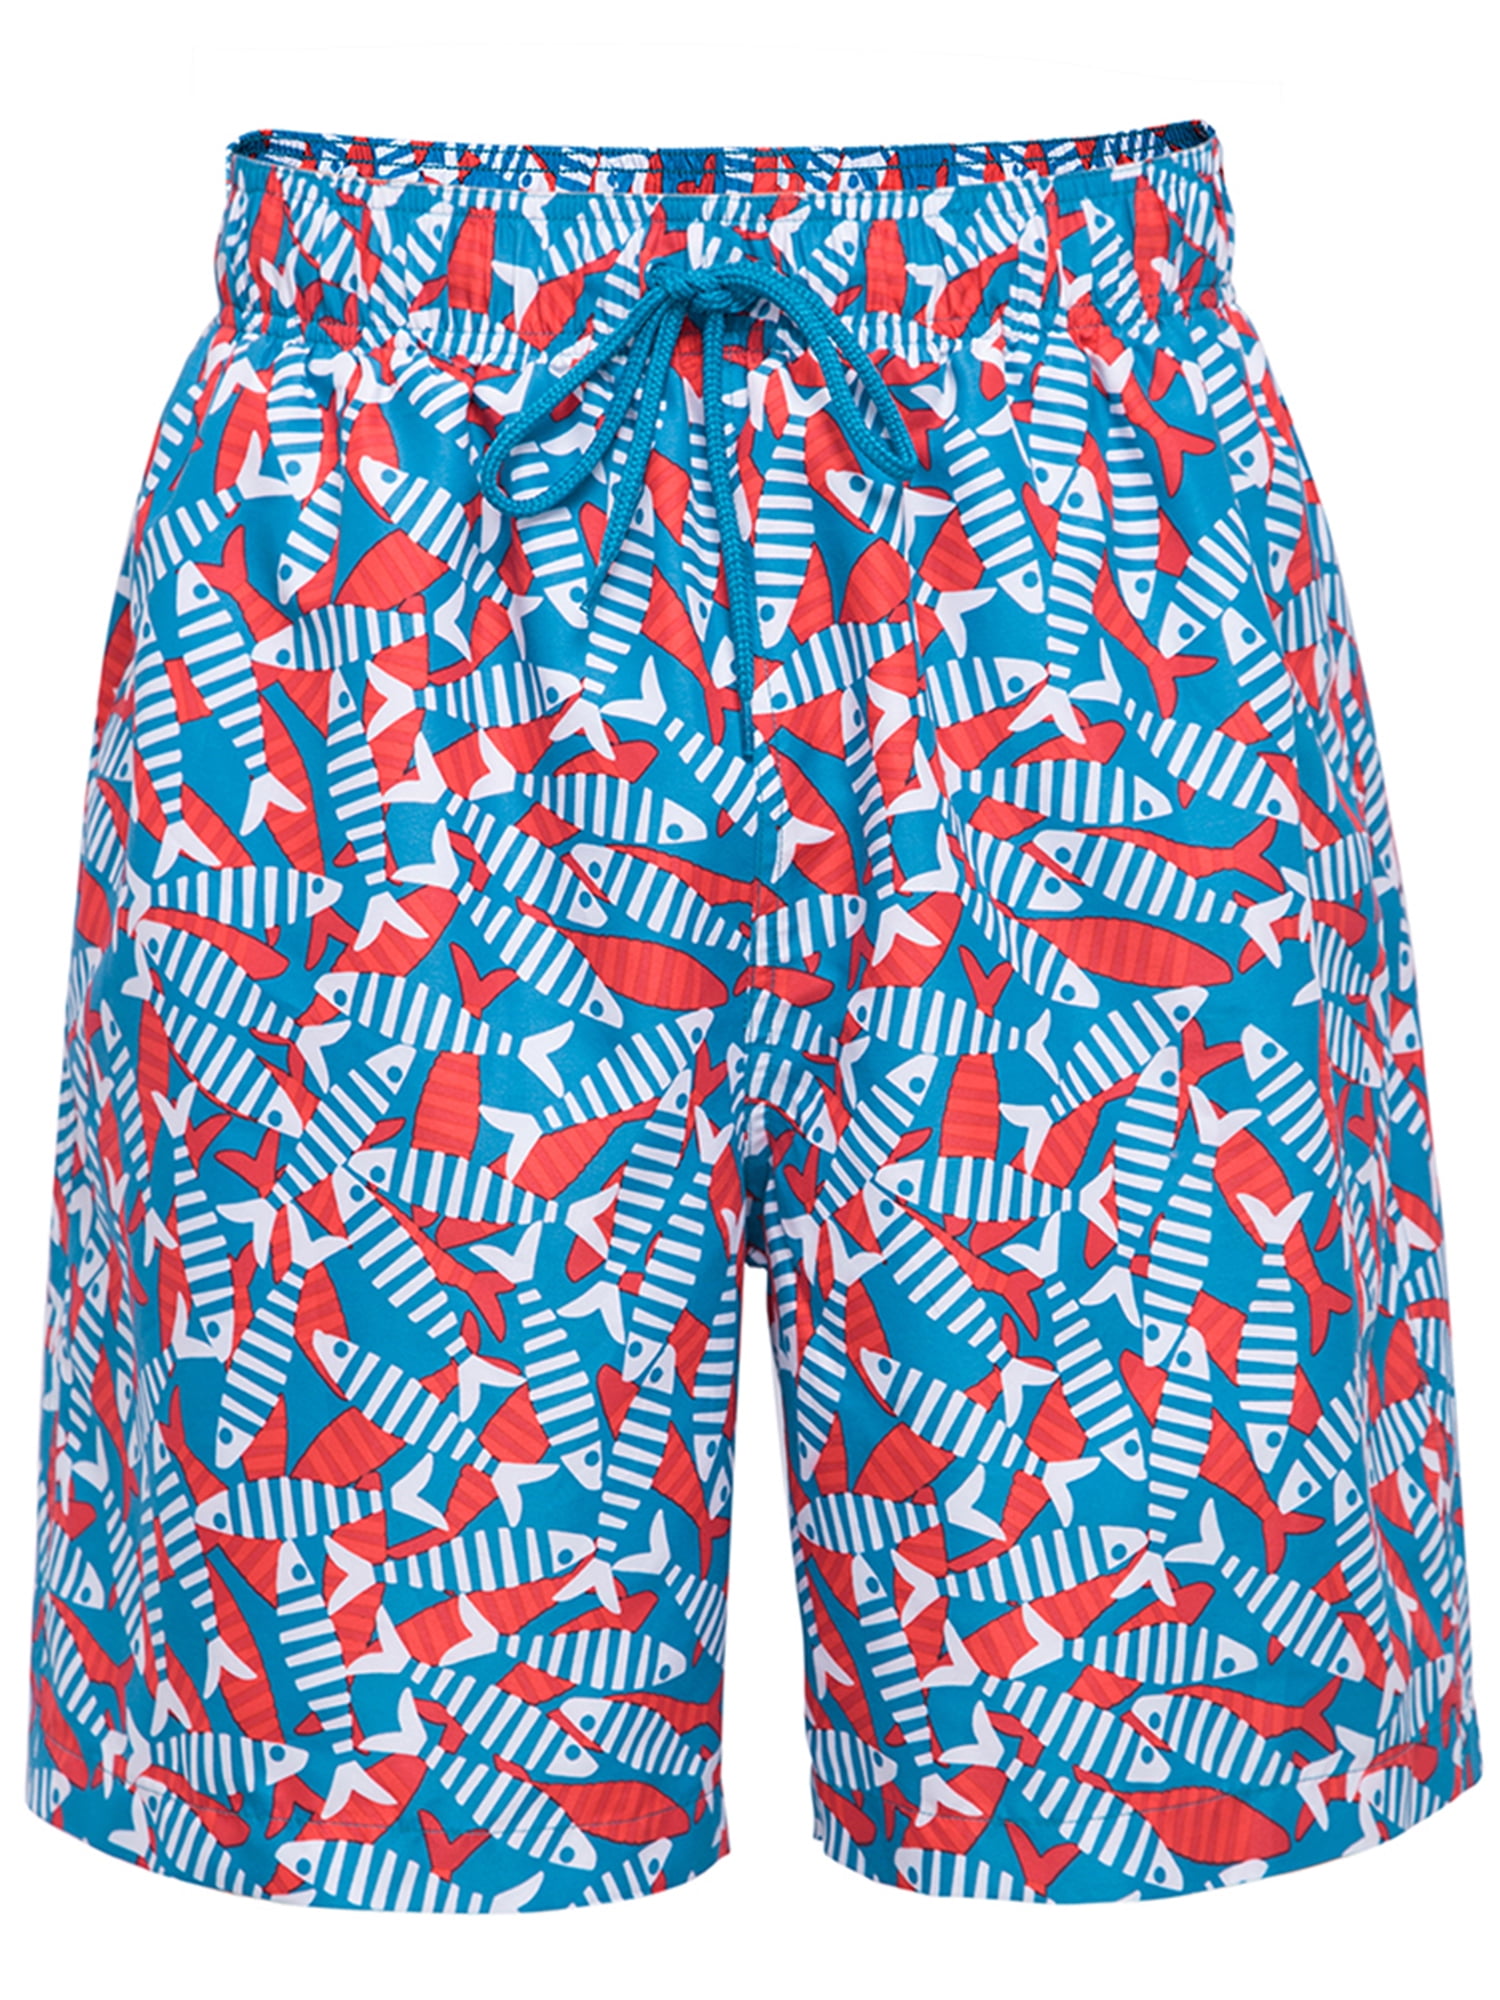 Rokka&Rolla Men's Swim Trunks Mesh Lined Beach Shorts, up to Size 2XL ...